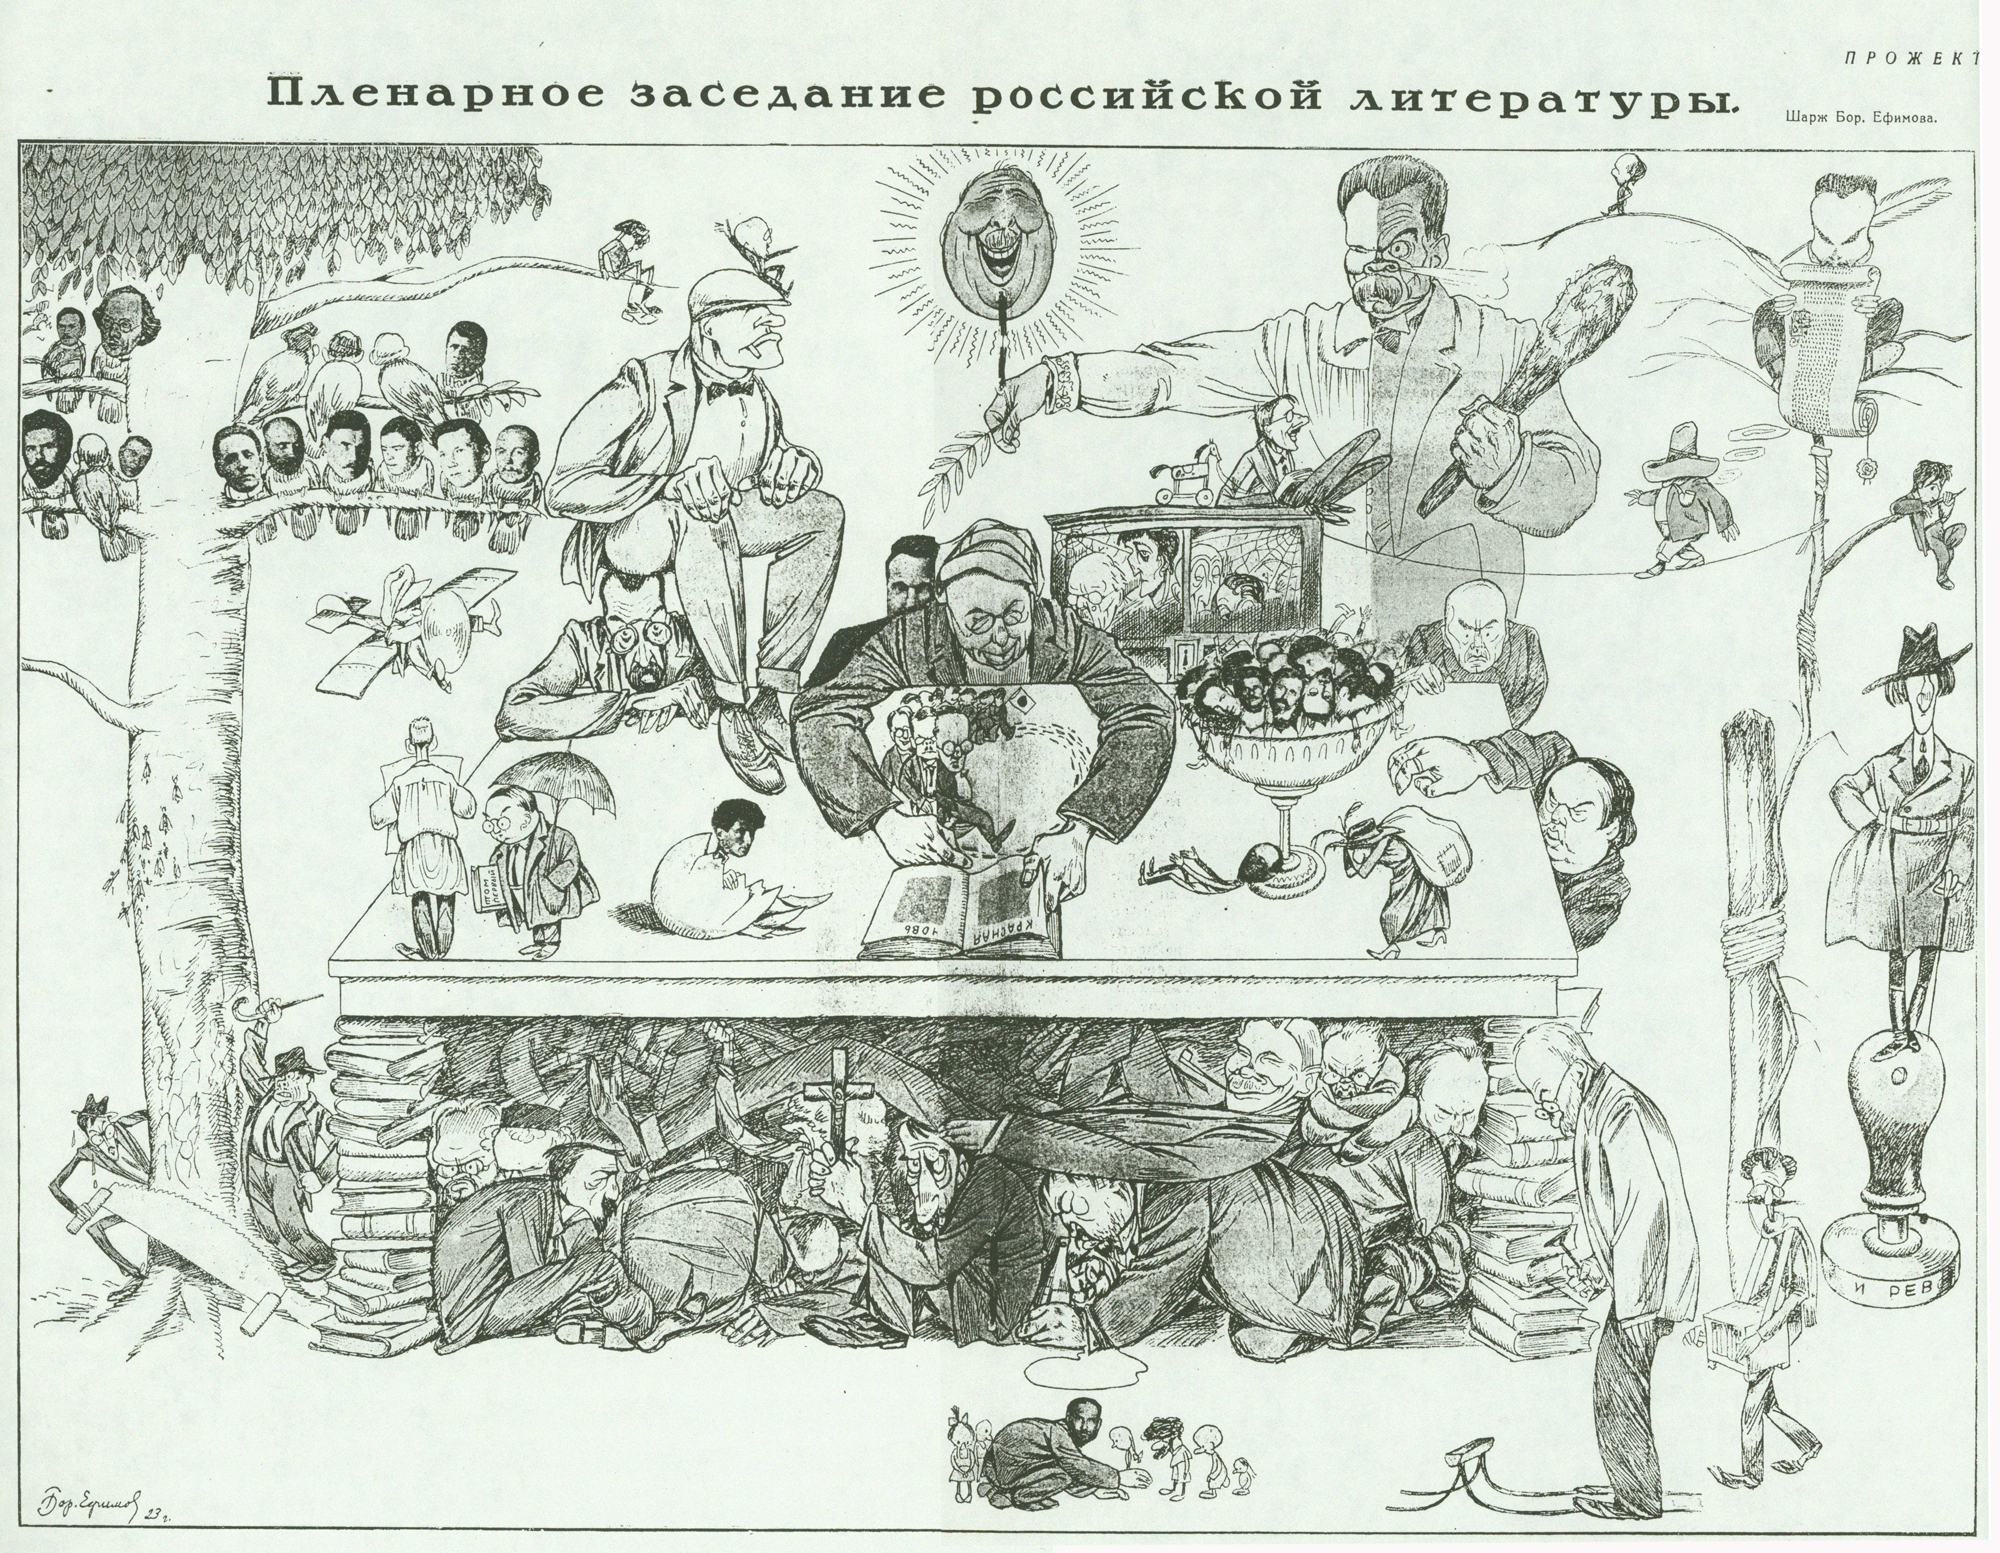 Plenary Session of Russian Writers, Efimov, 1923